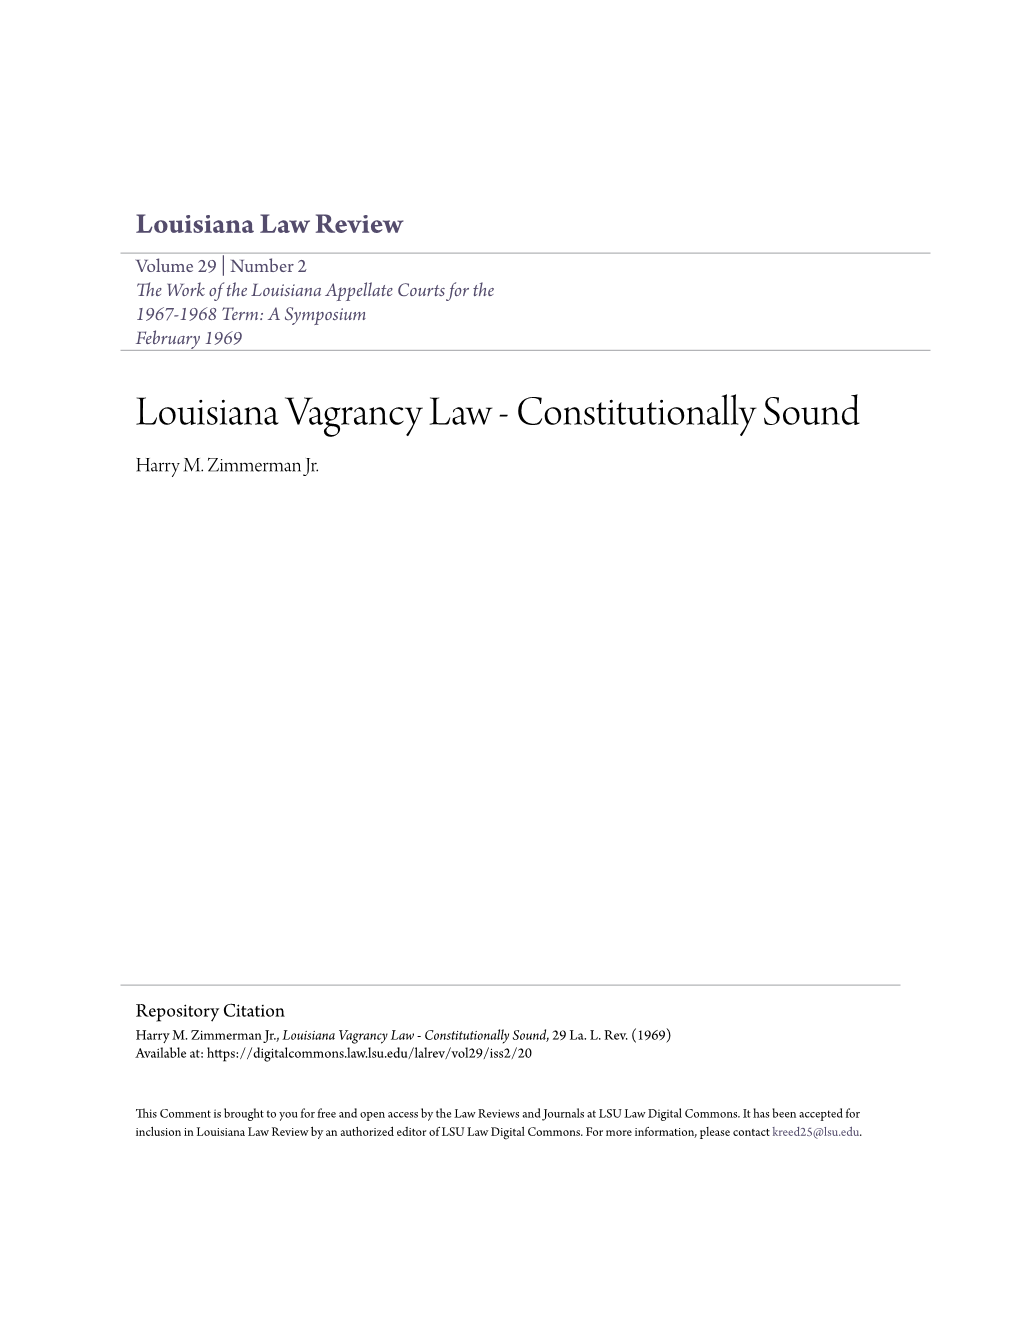 Louisiana Vagrancy Law - Constitutionally Sound Harry M